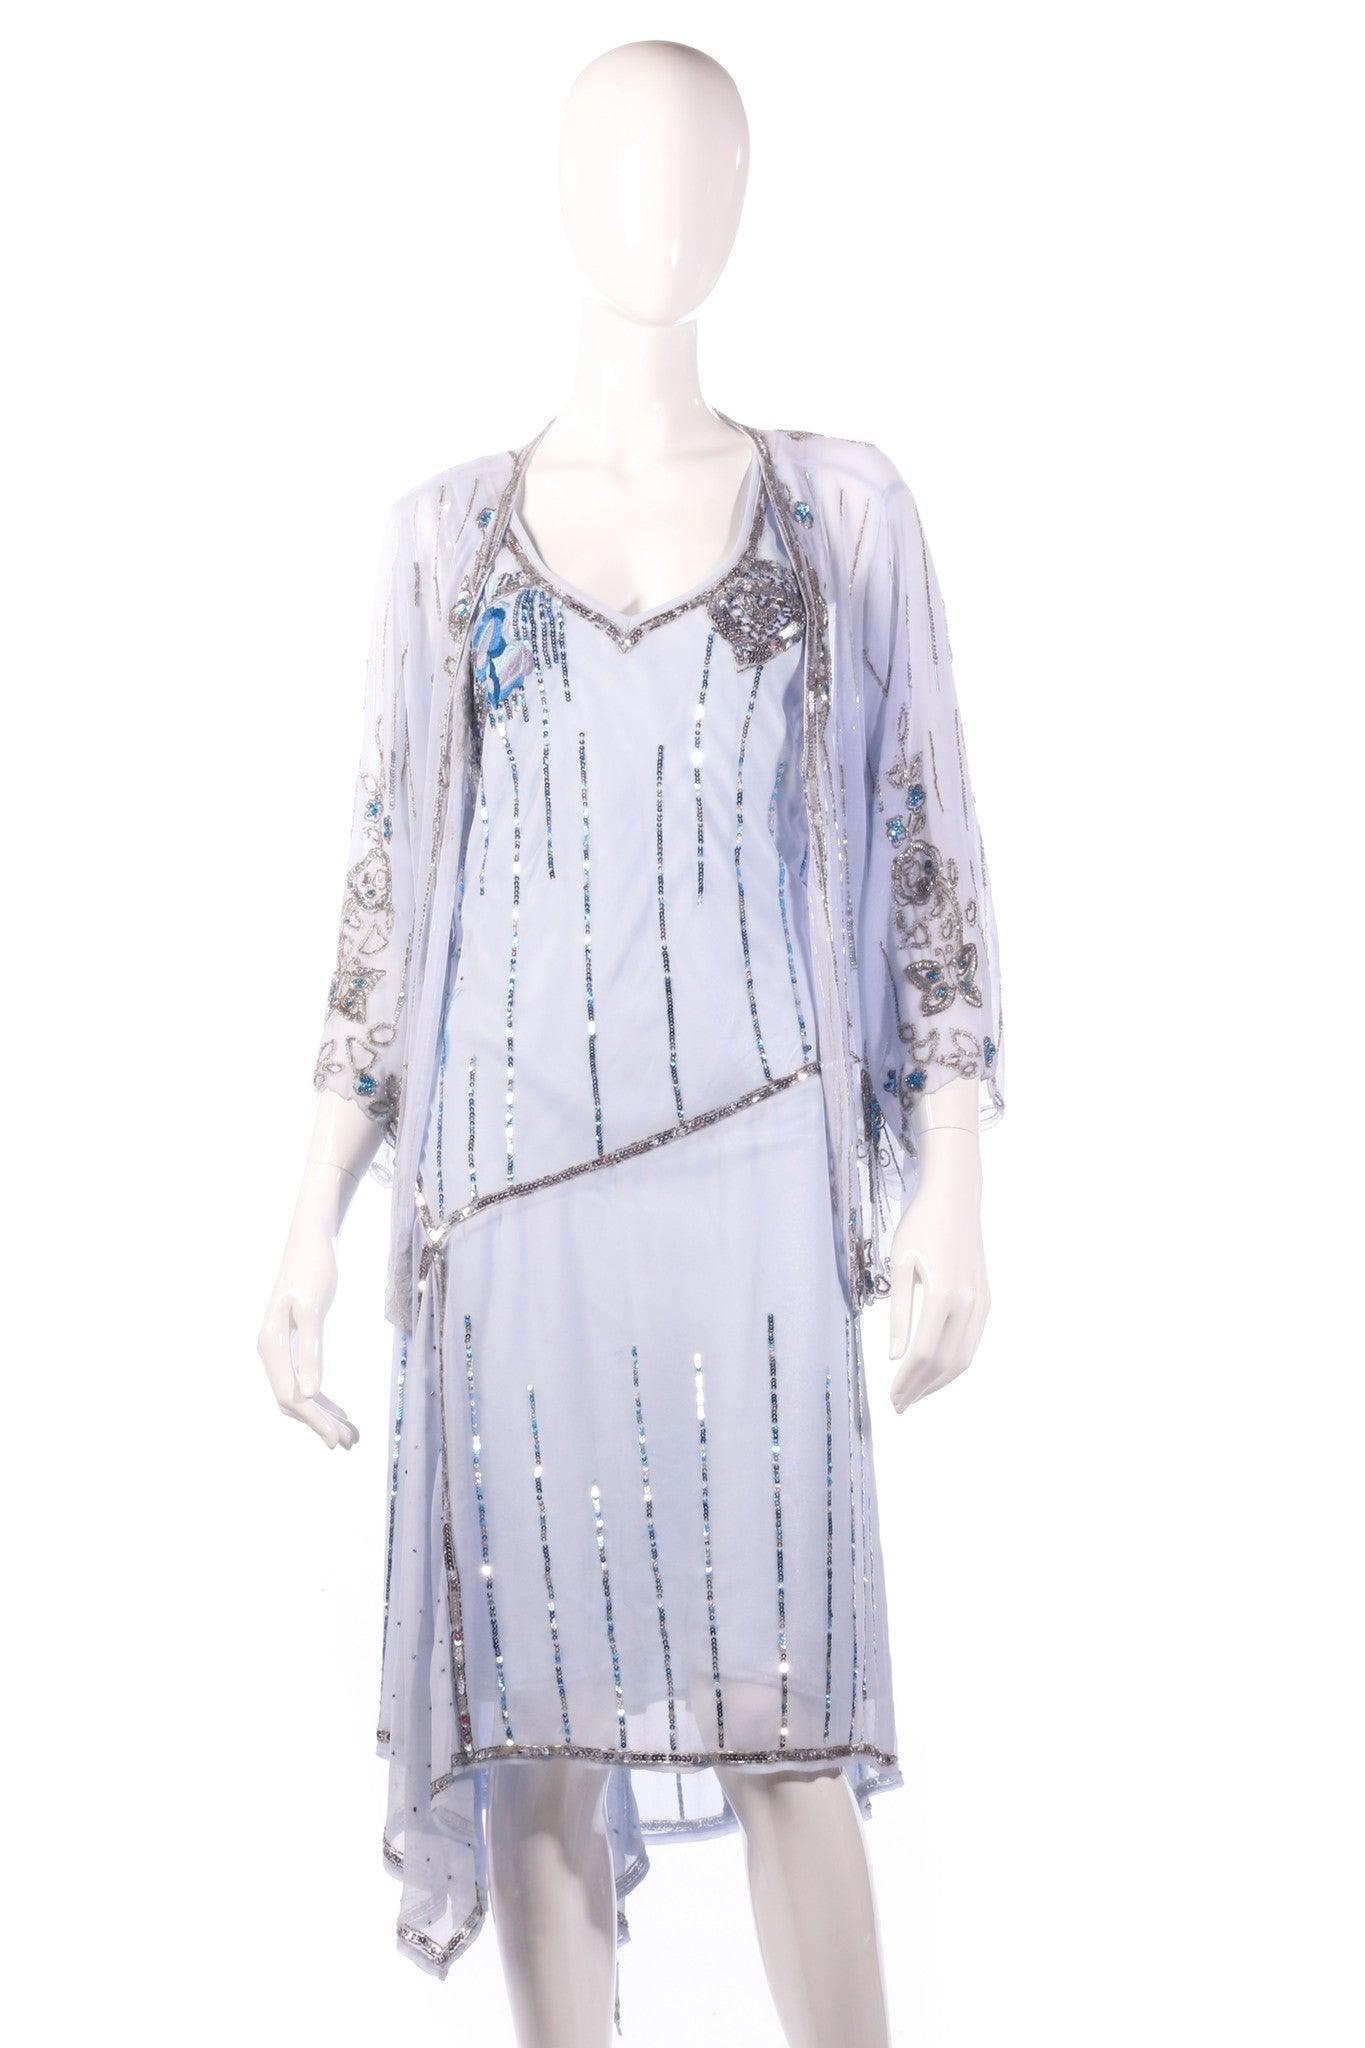 beaded dress 1920's style